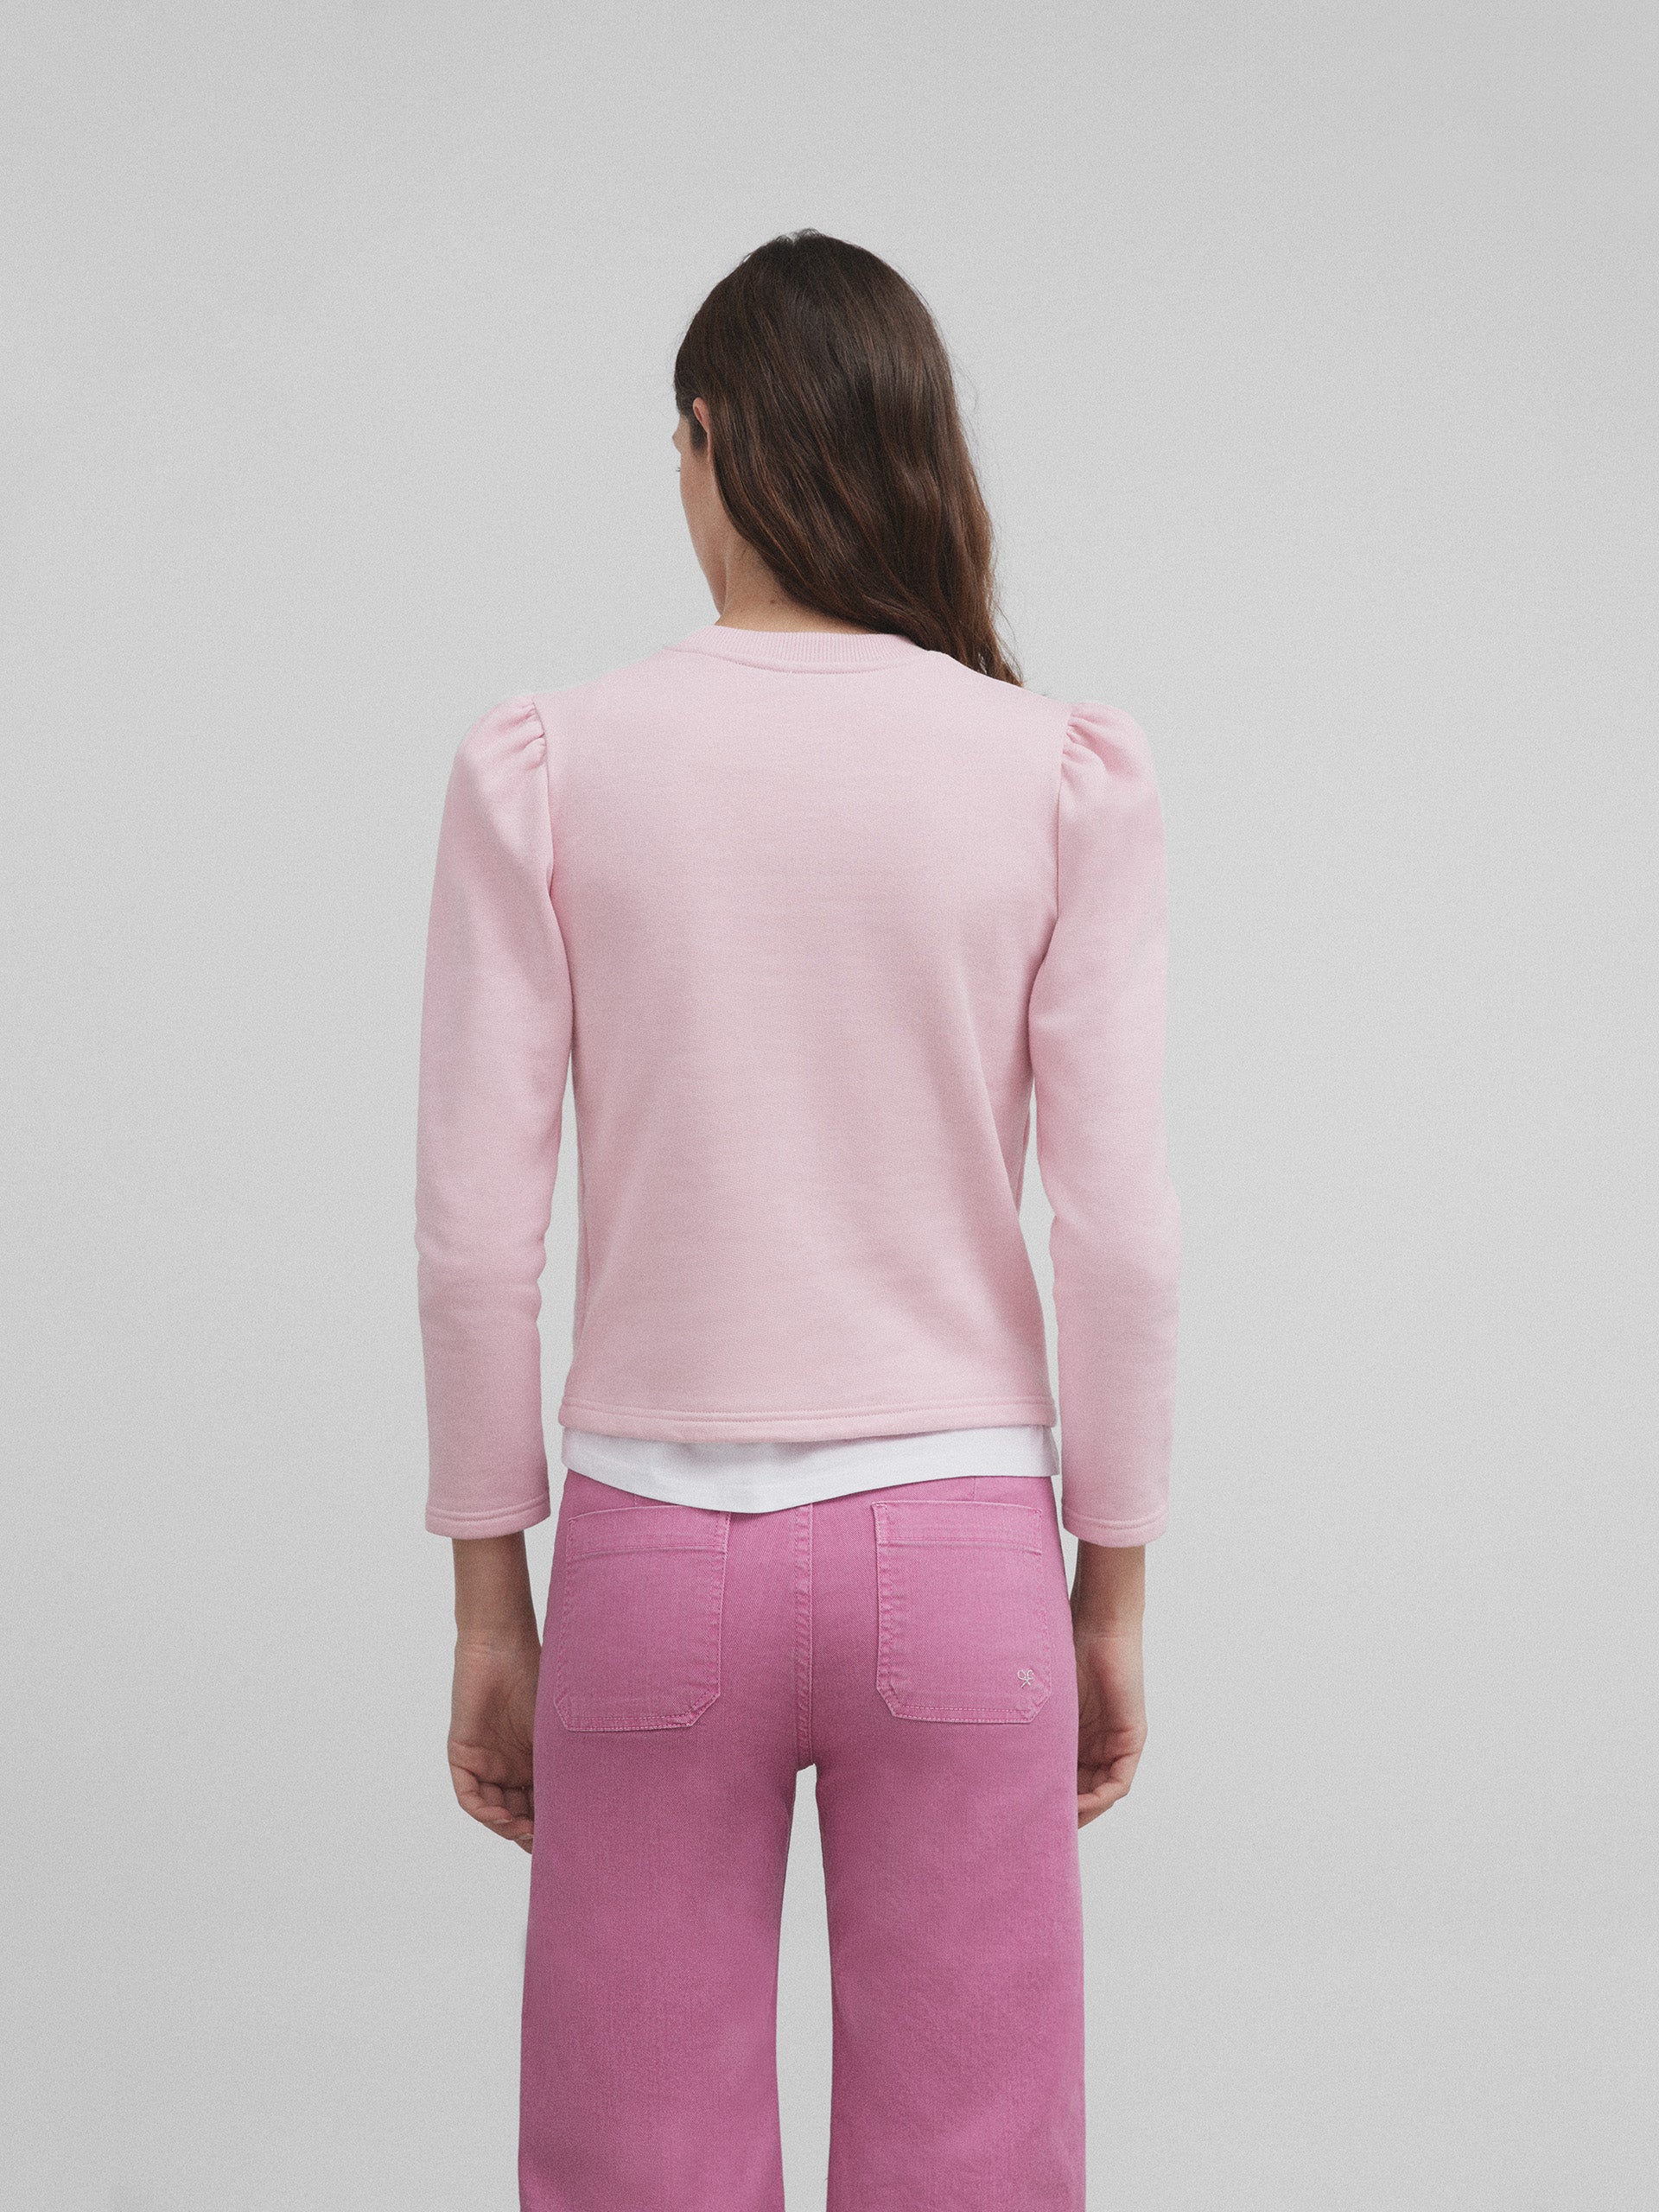 Women's pink puff sleeve sweatshirt